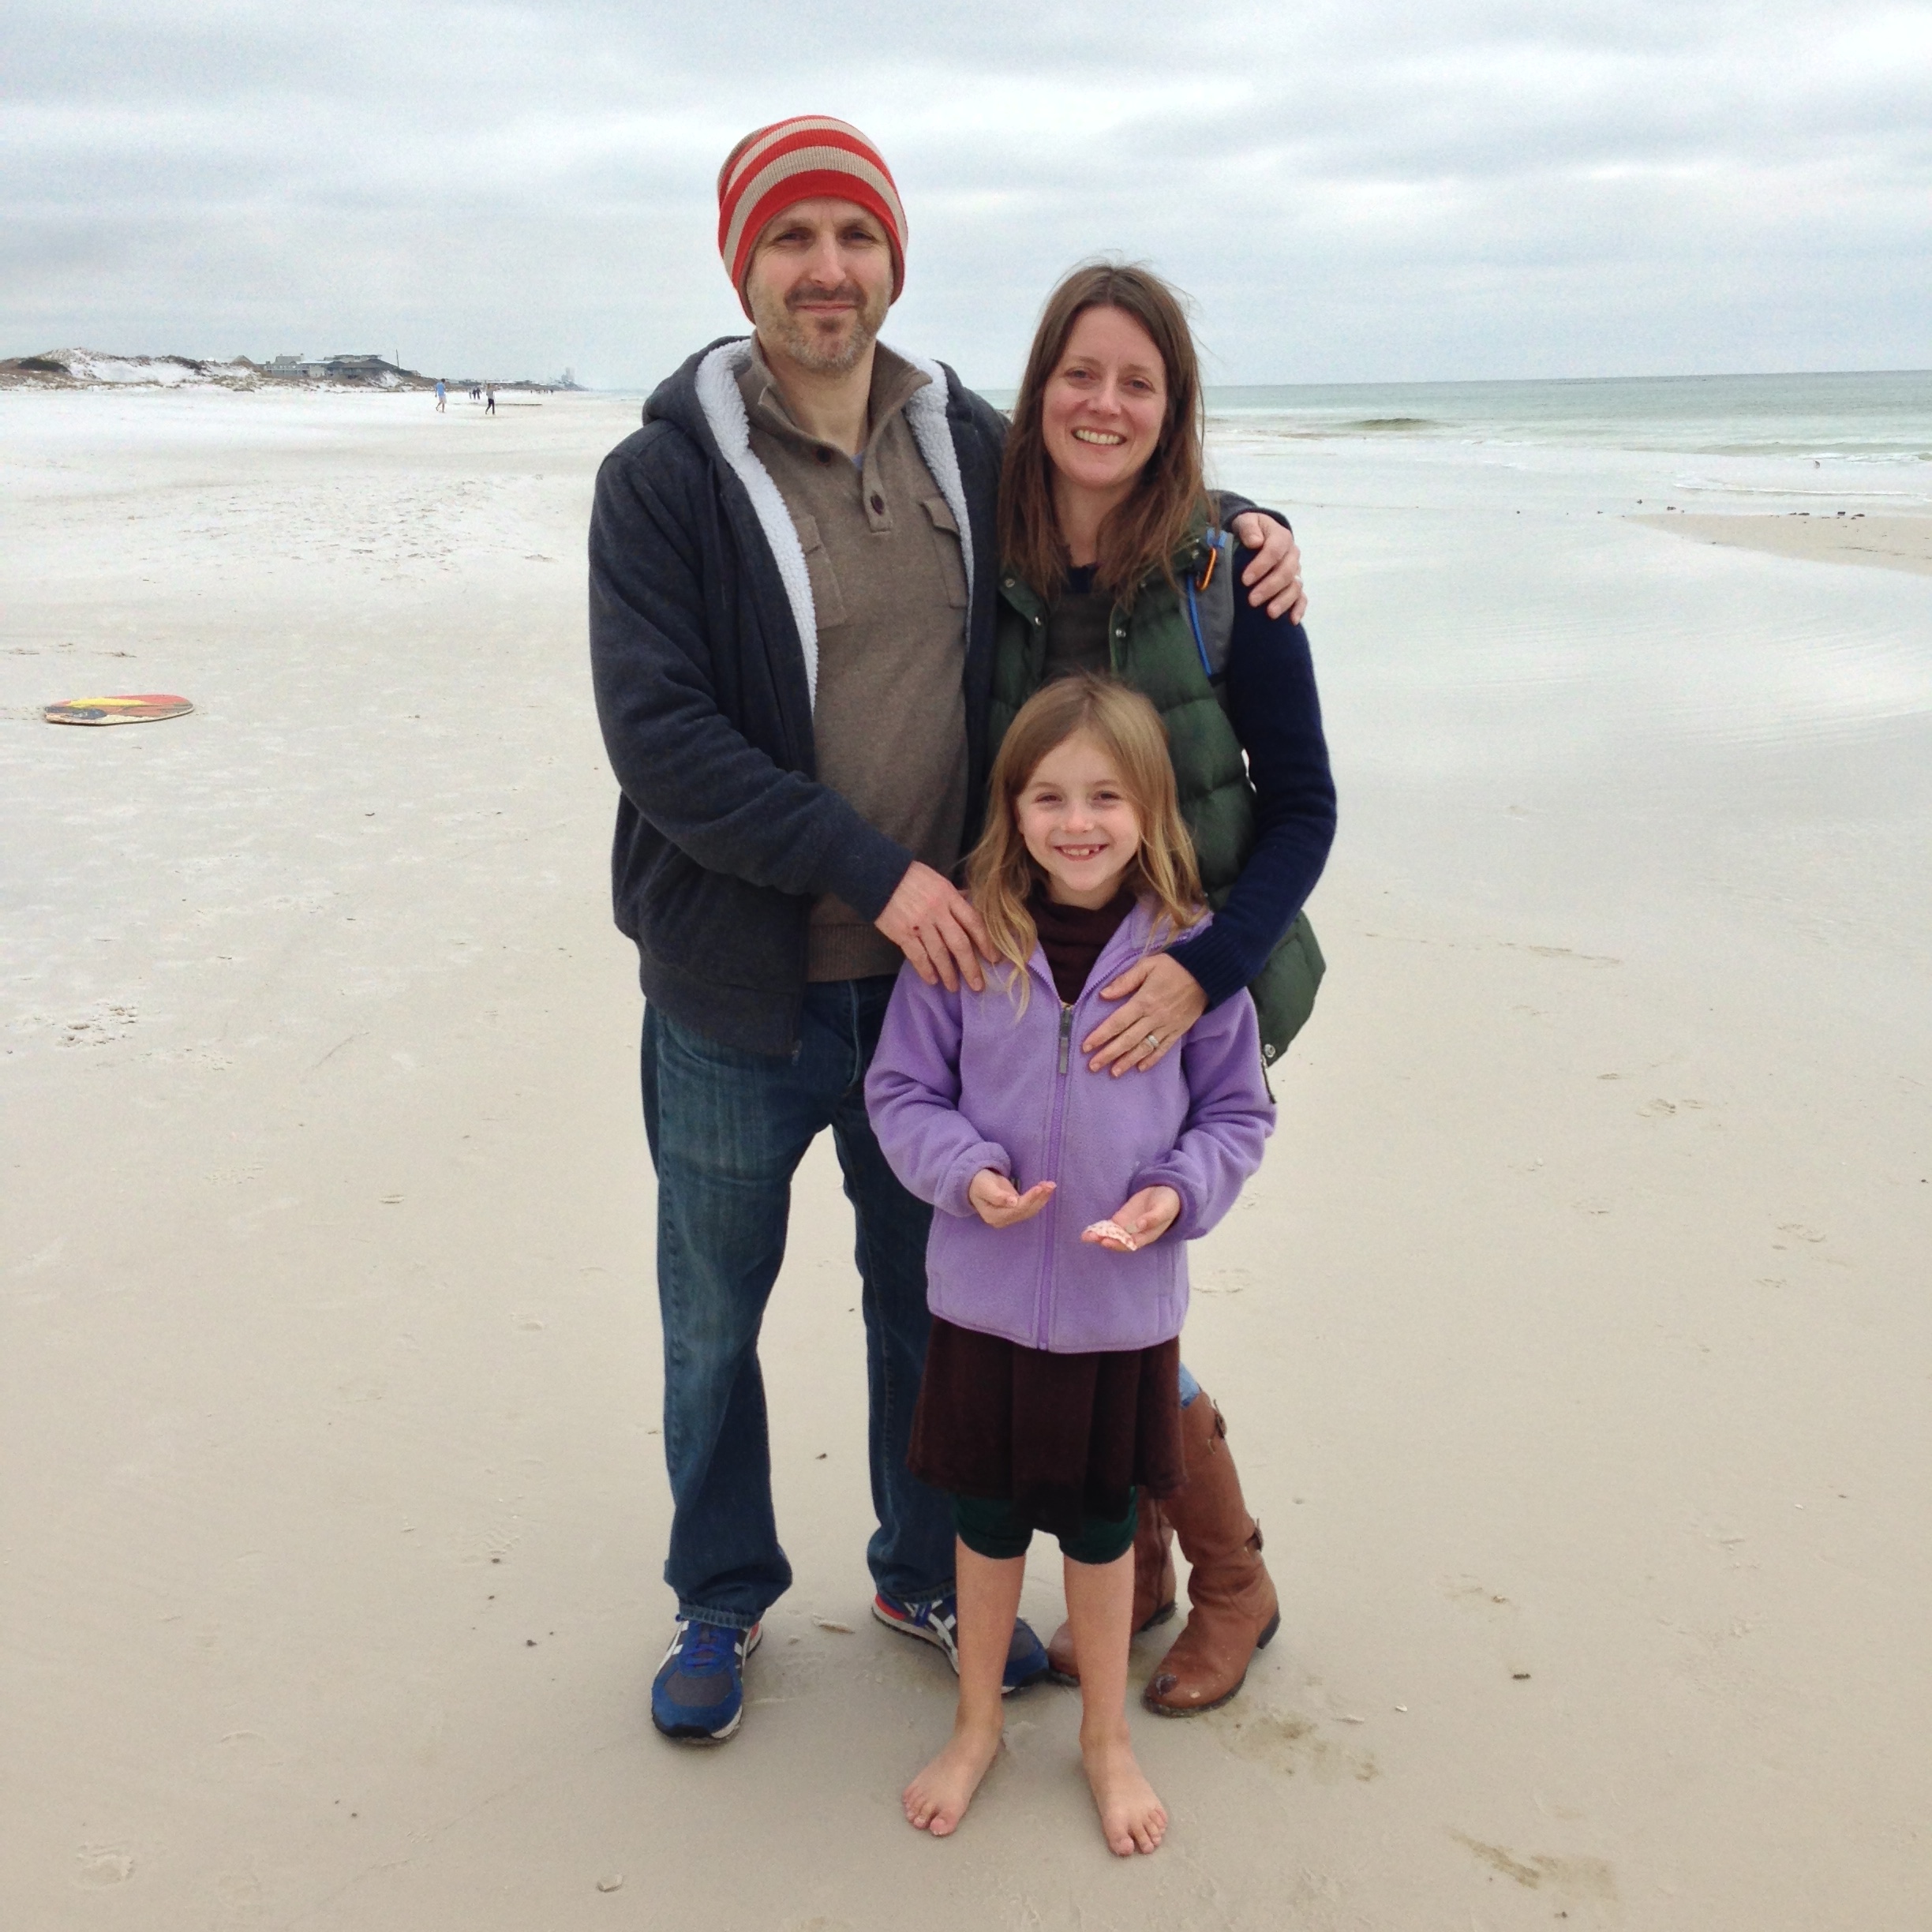 Heidi Staples with her family on a beach